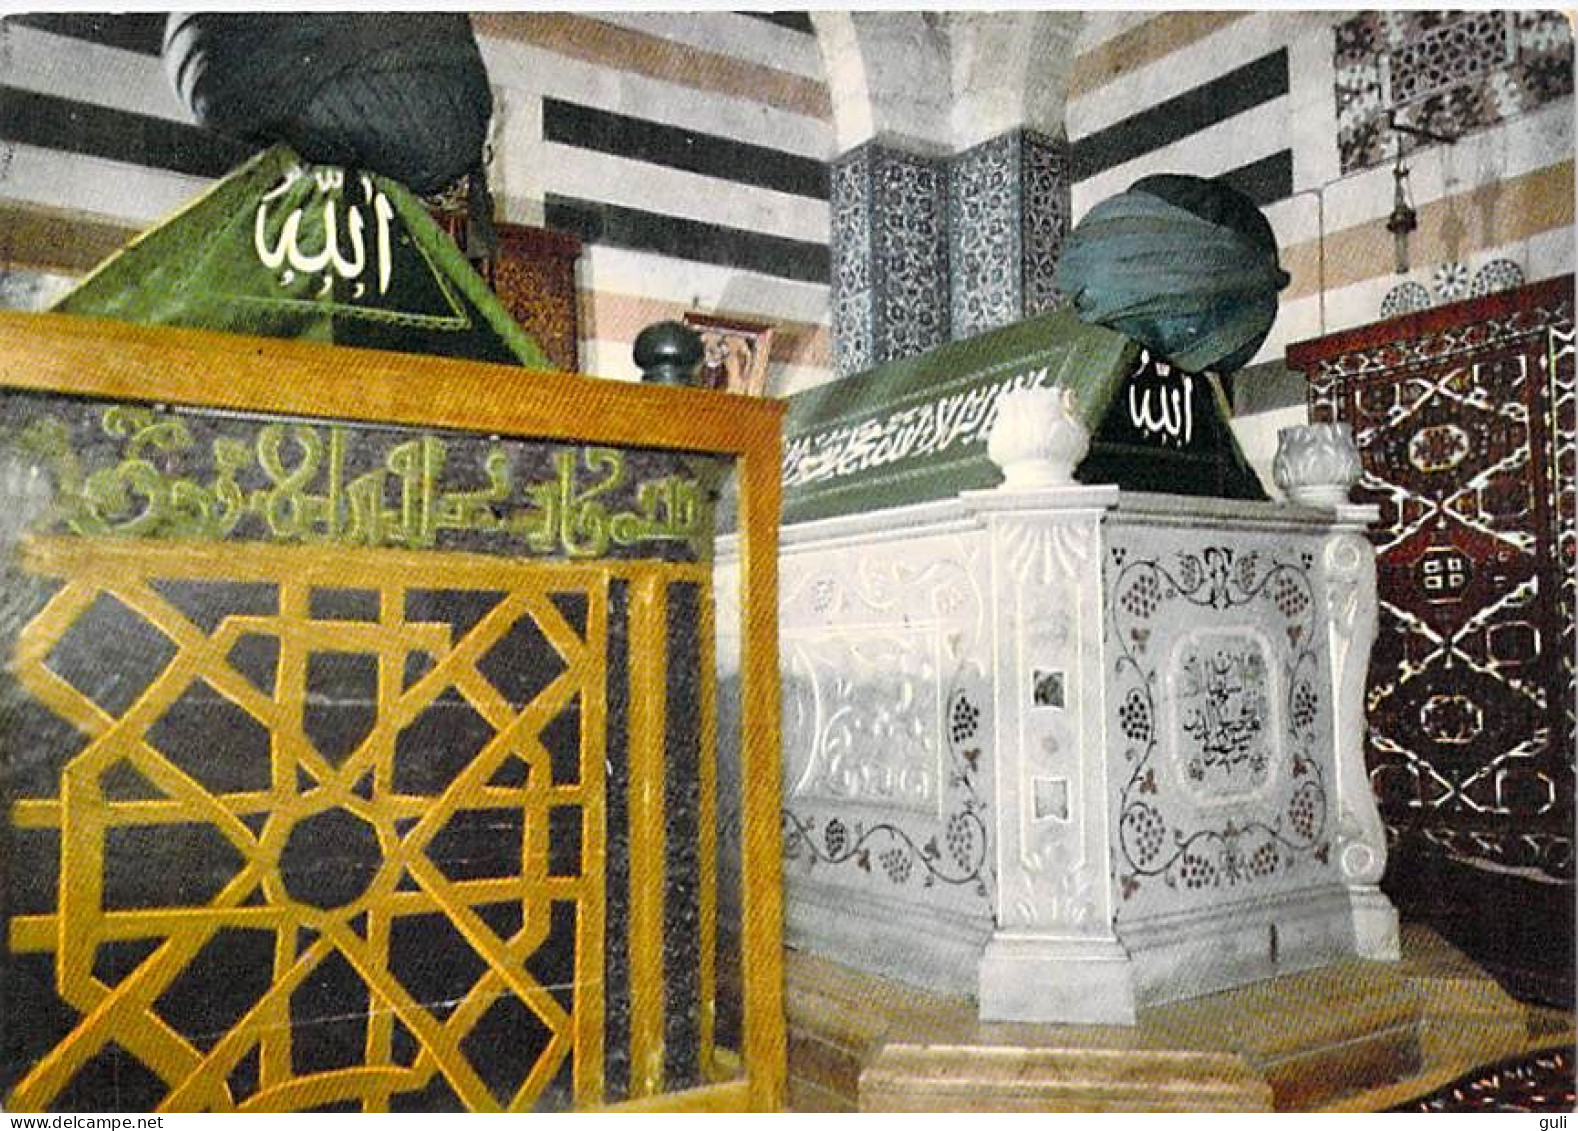 Asie SYRIE Syria DAMASCUS DAMAS  Mausolée De Saladin Saladin's Mausoleum   / CHAHINIAN Damascus DAM 35 *PRIX FIXE - Syrien